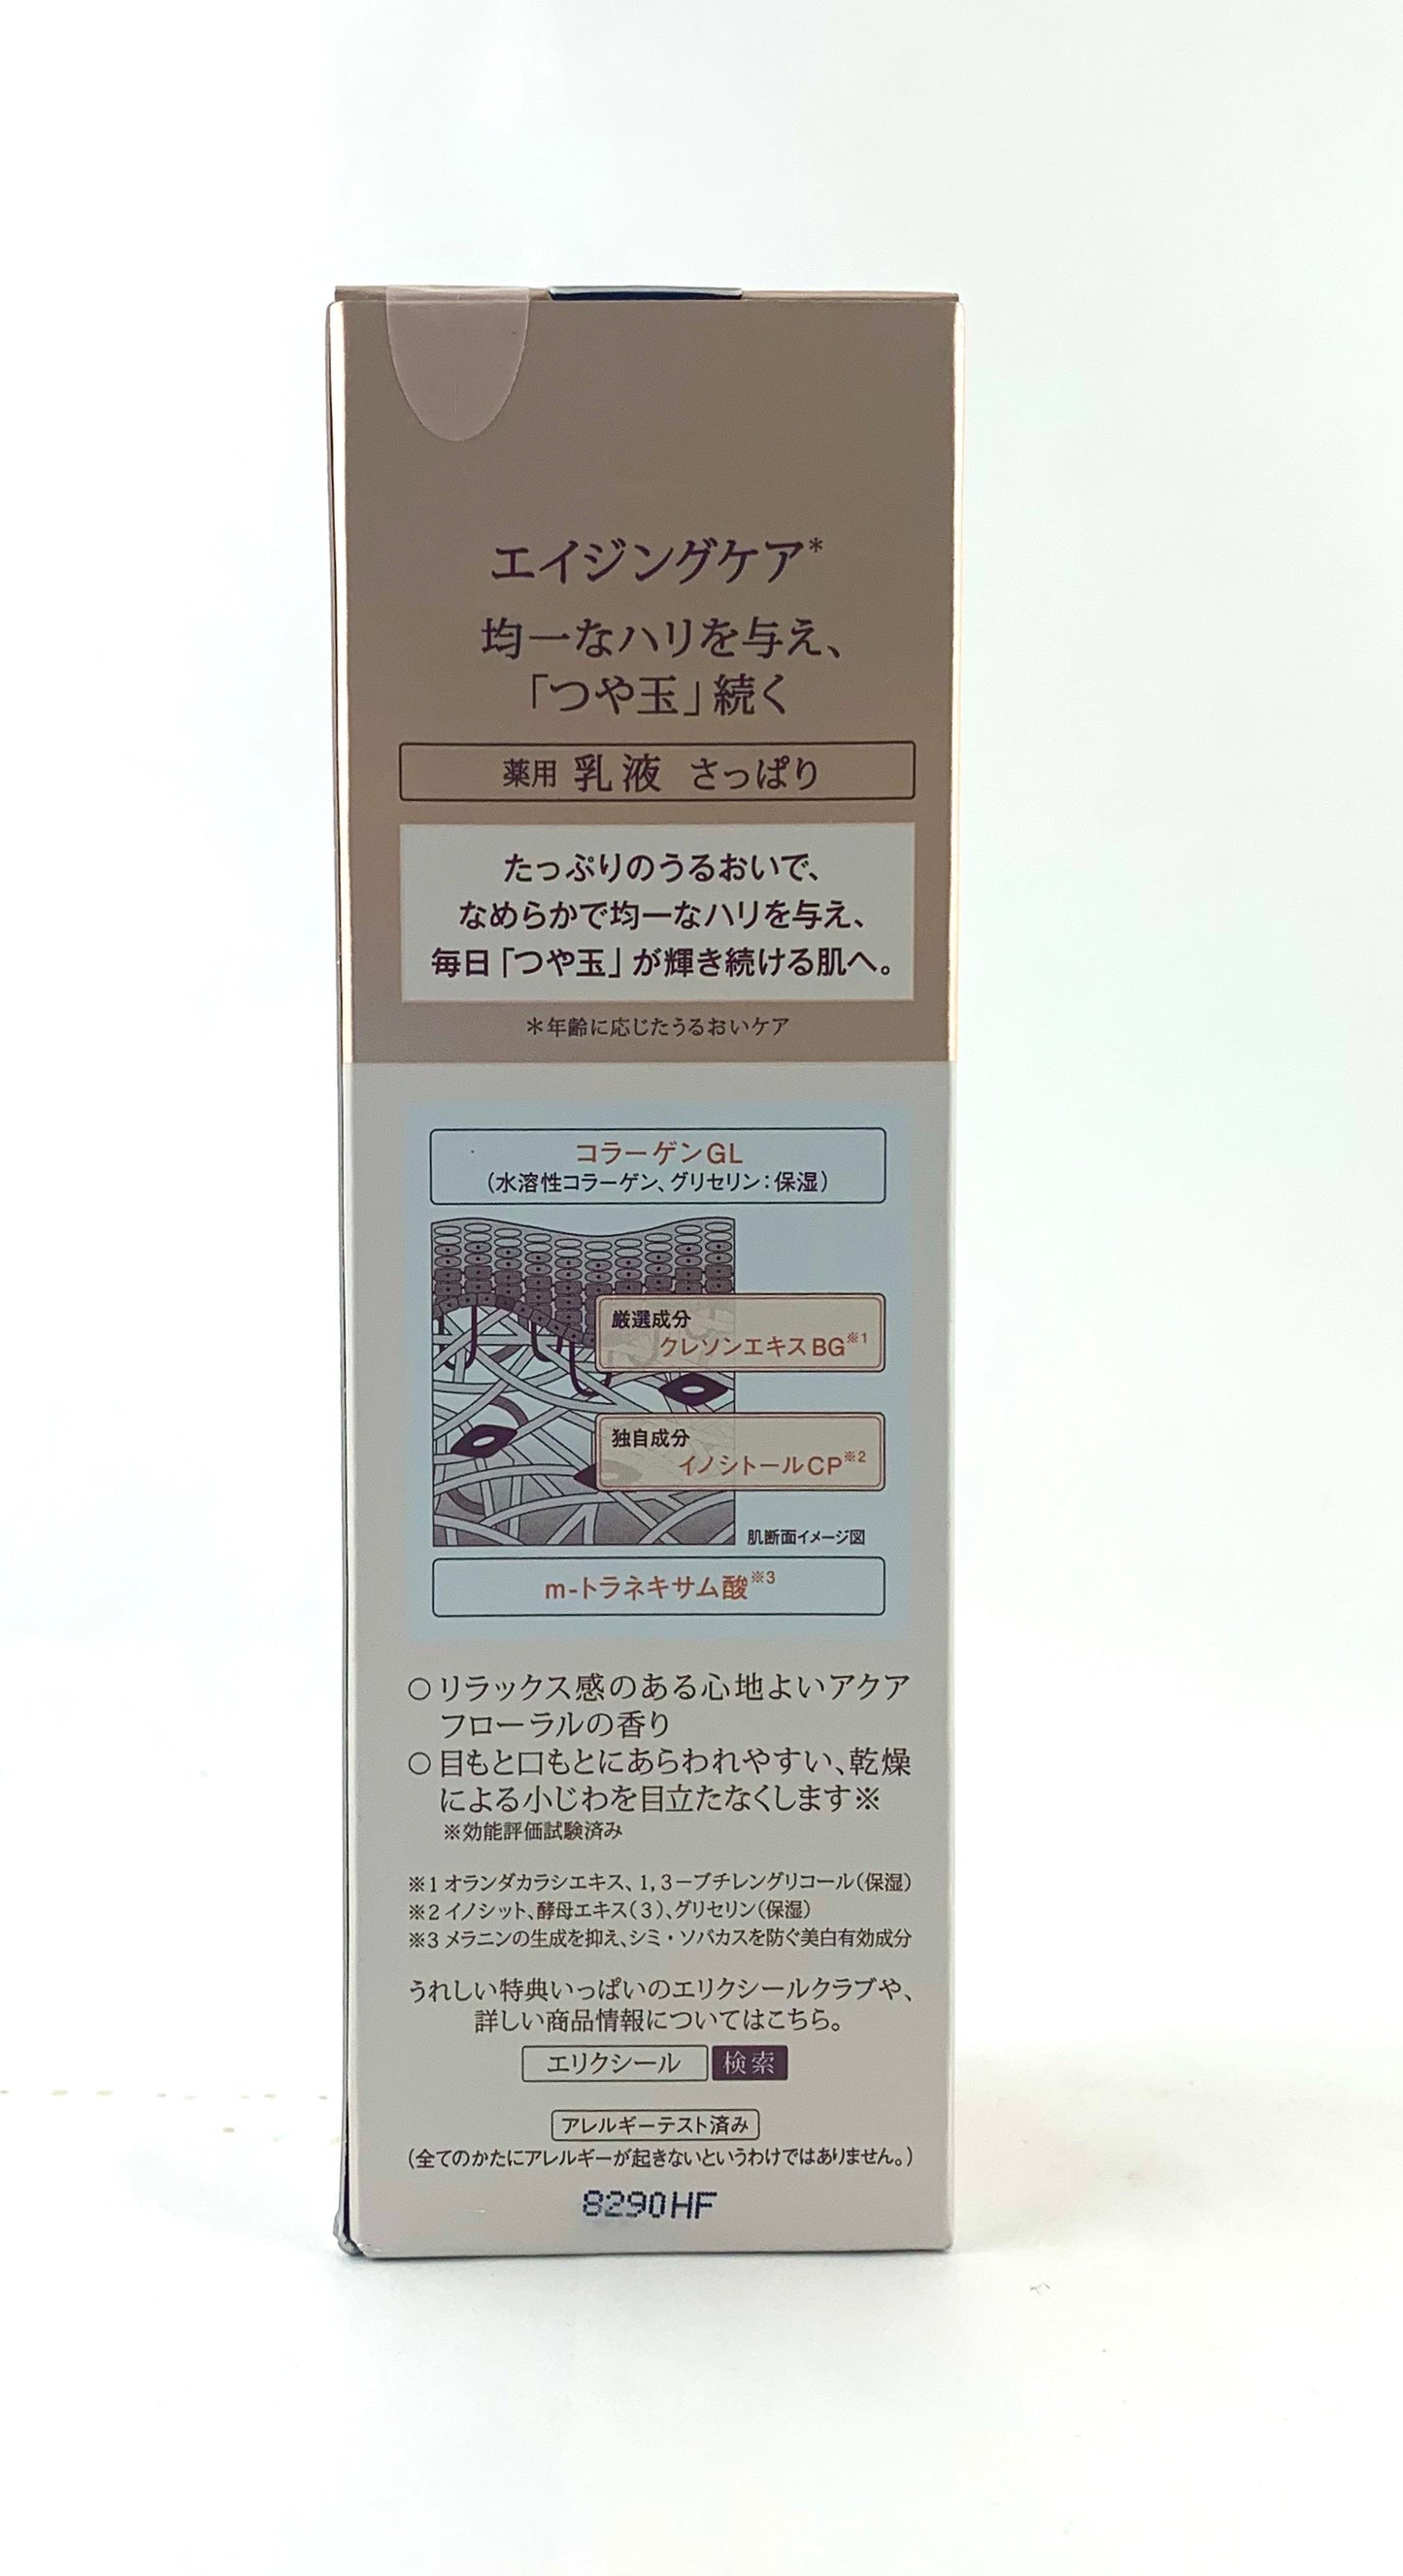 Shiseido Elixir Skin Care By Age Lifting Moisture Emulsion TI 130ml.